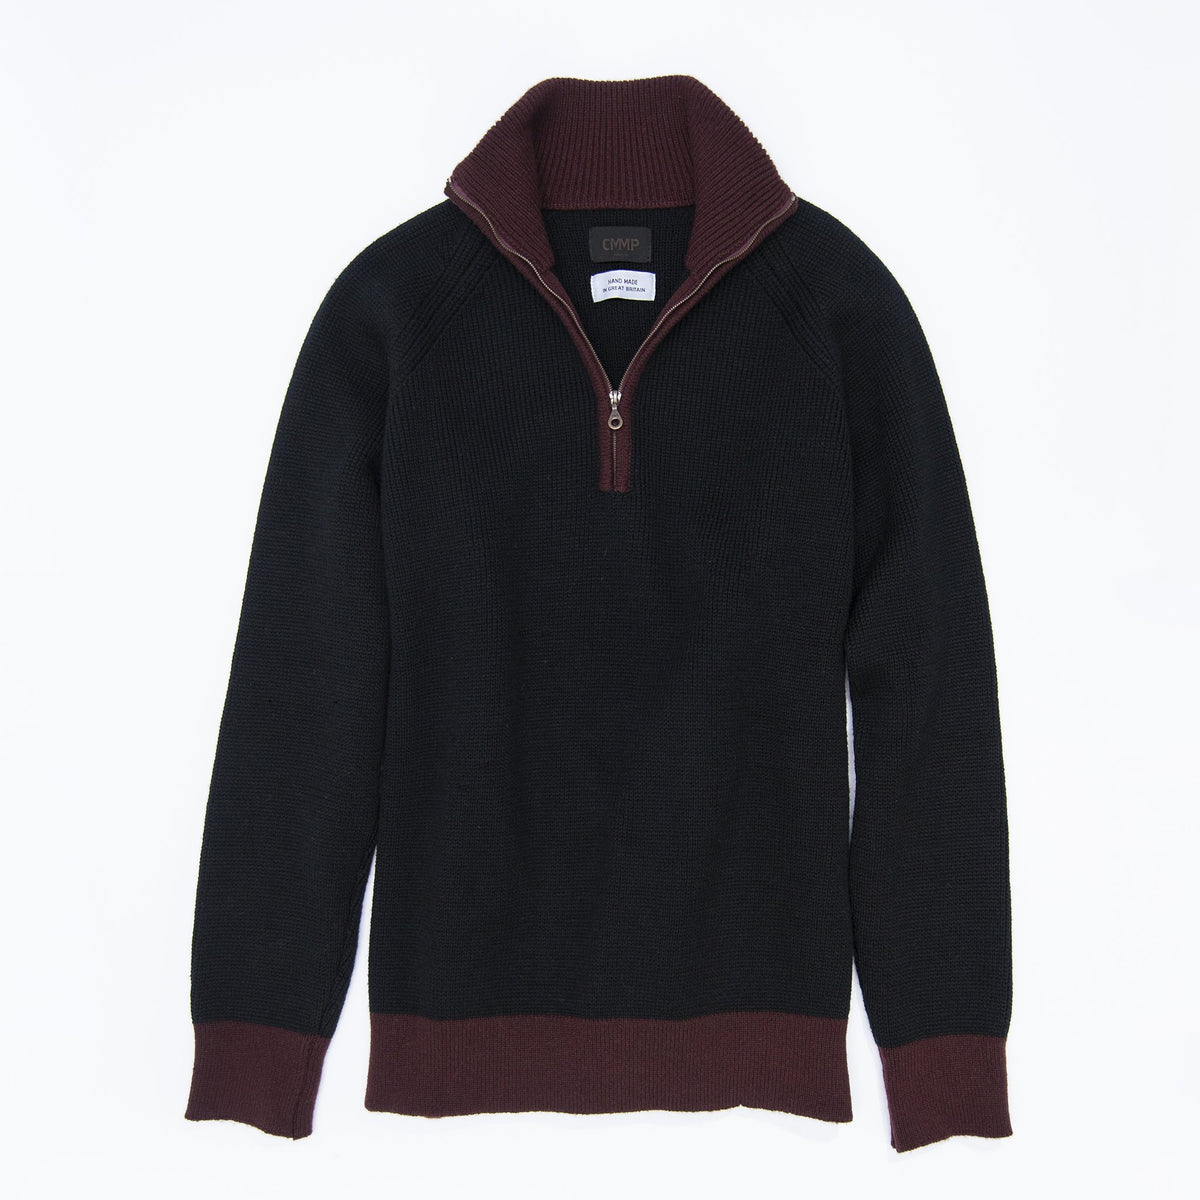 1/4-Zip 3-Ply Sweater - Black / Dark Red knitwear Commonwealth Proper